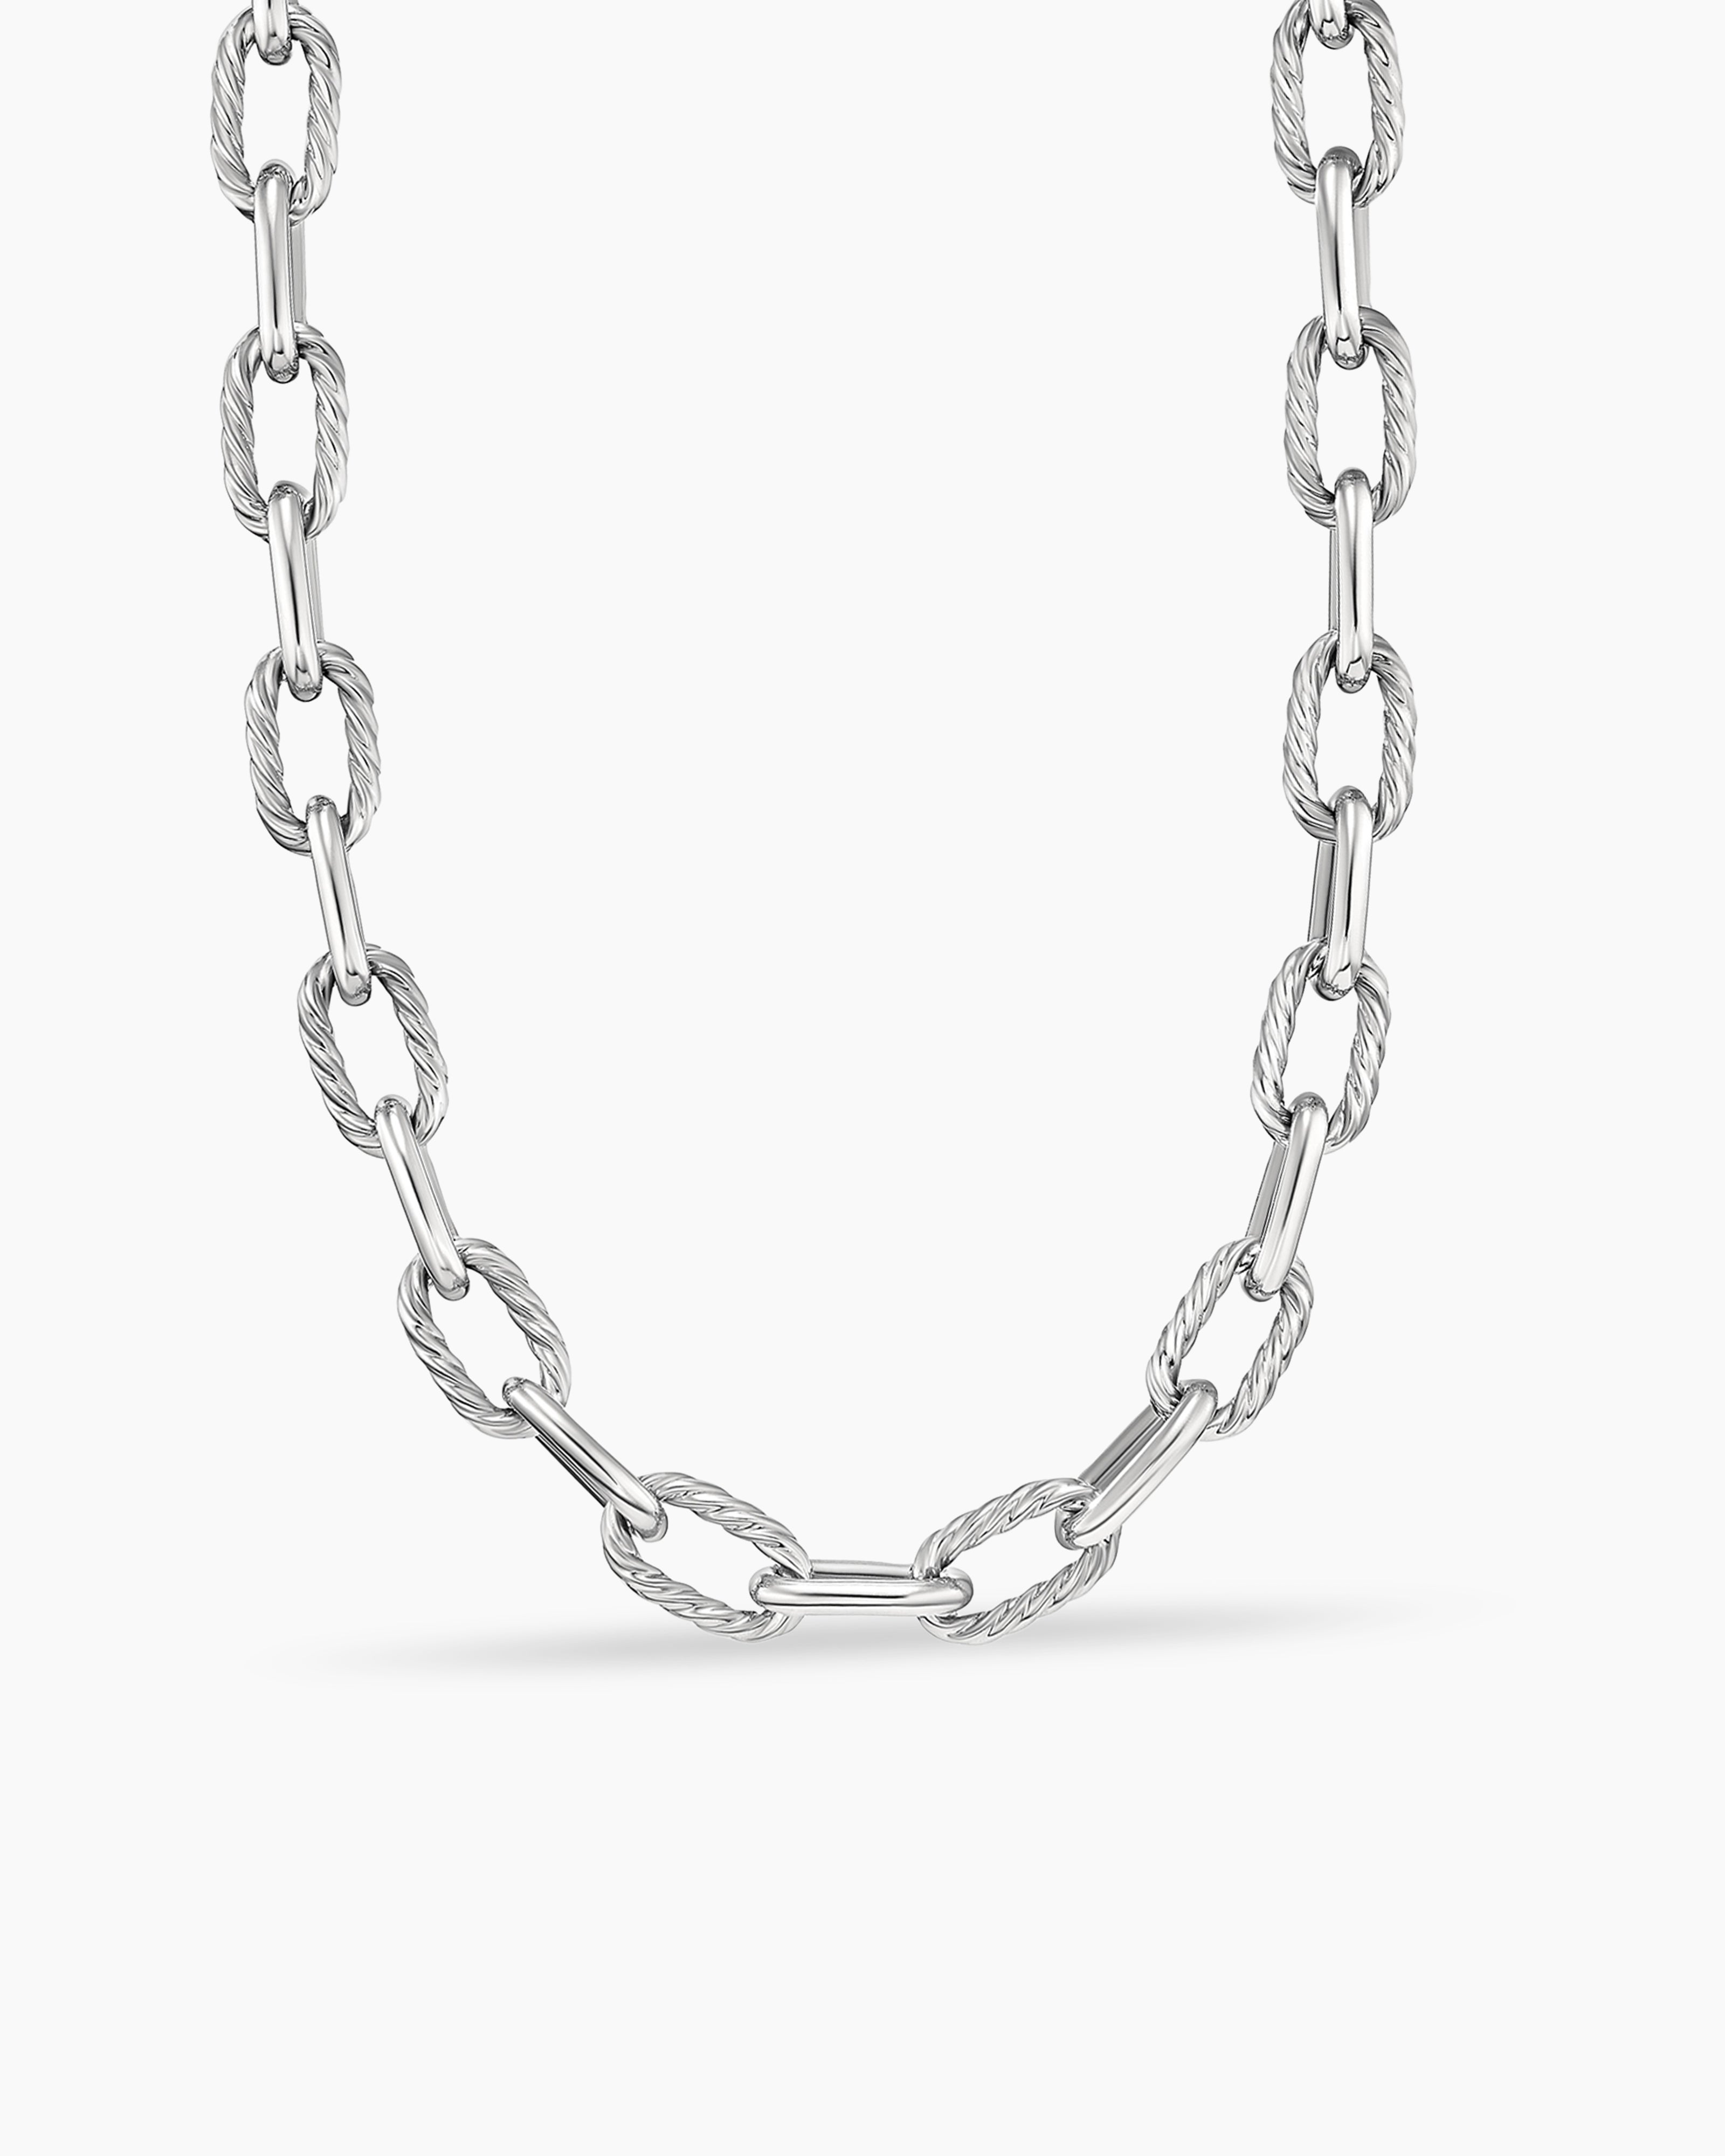 Ewan Long Ball Chain in Sterling Silver for men